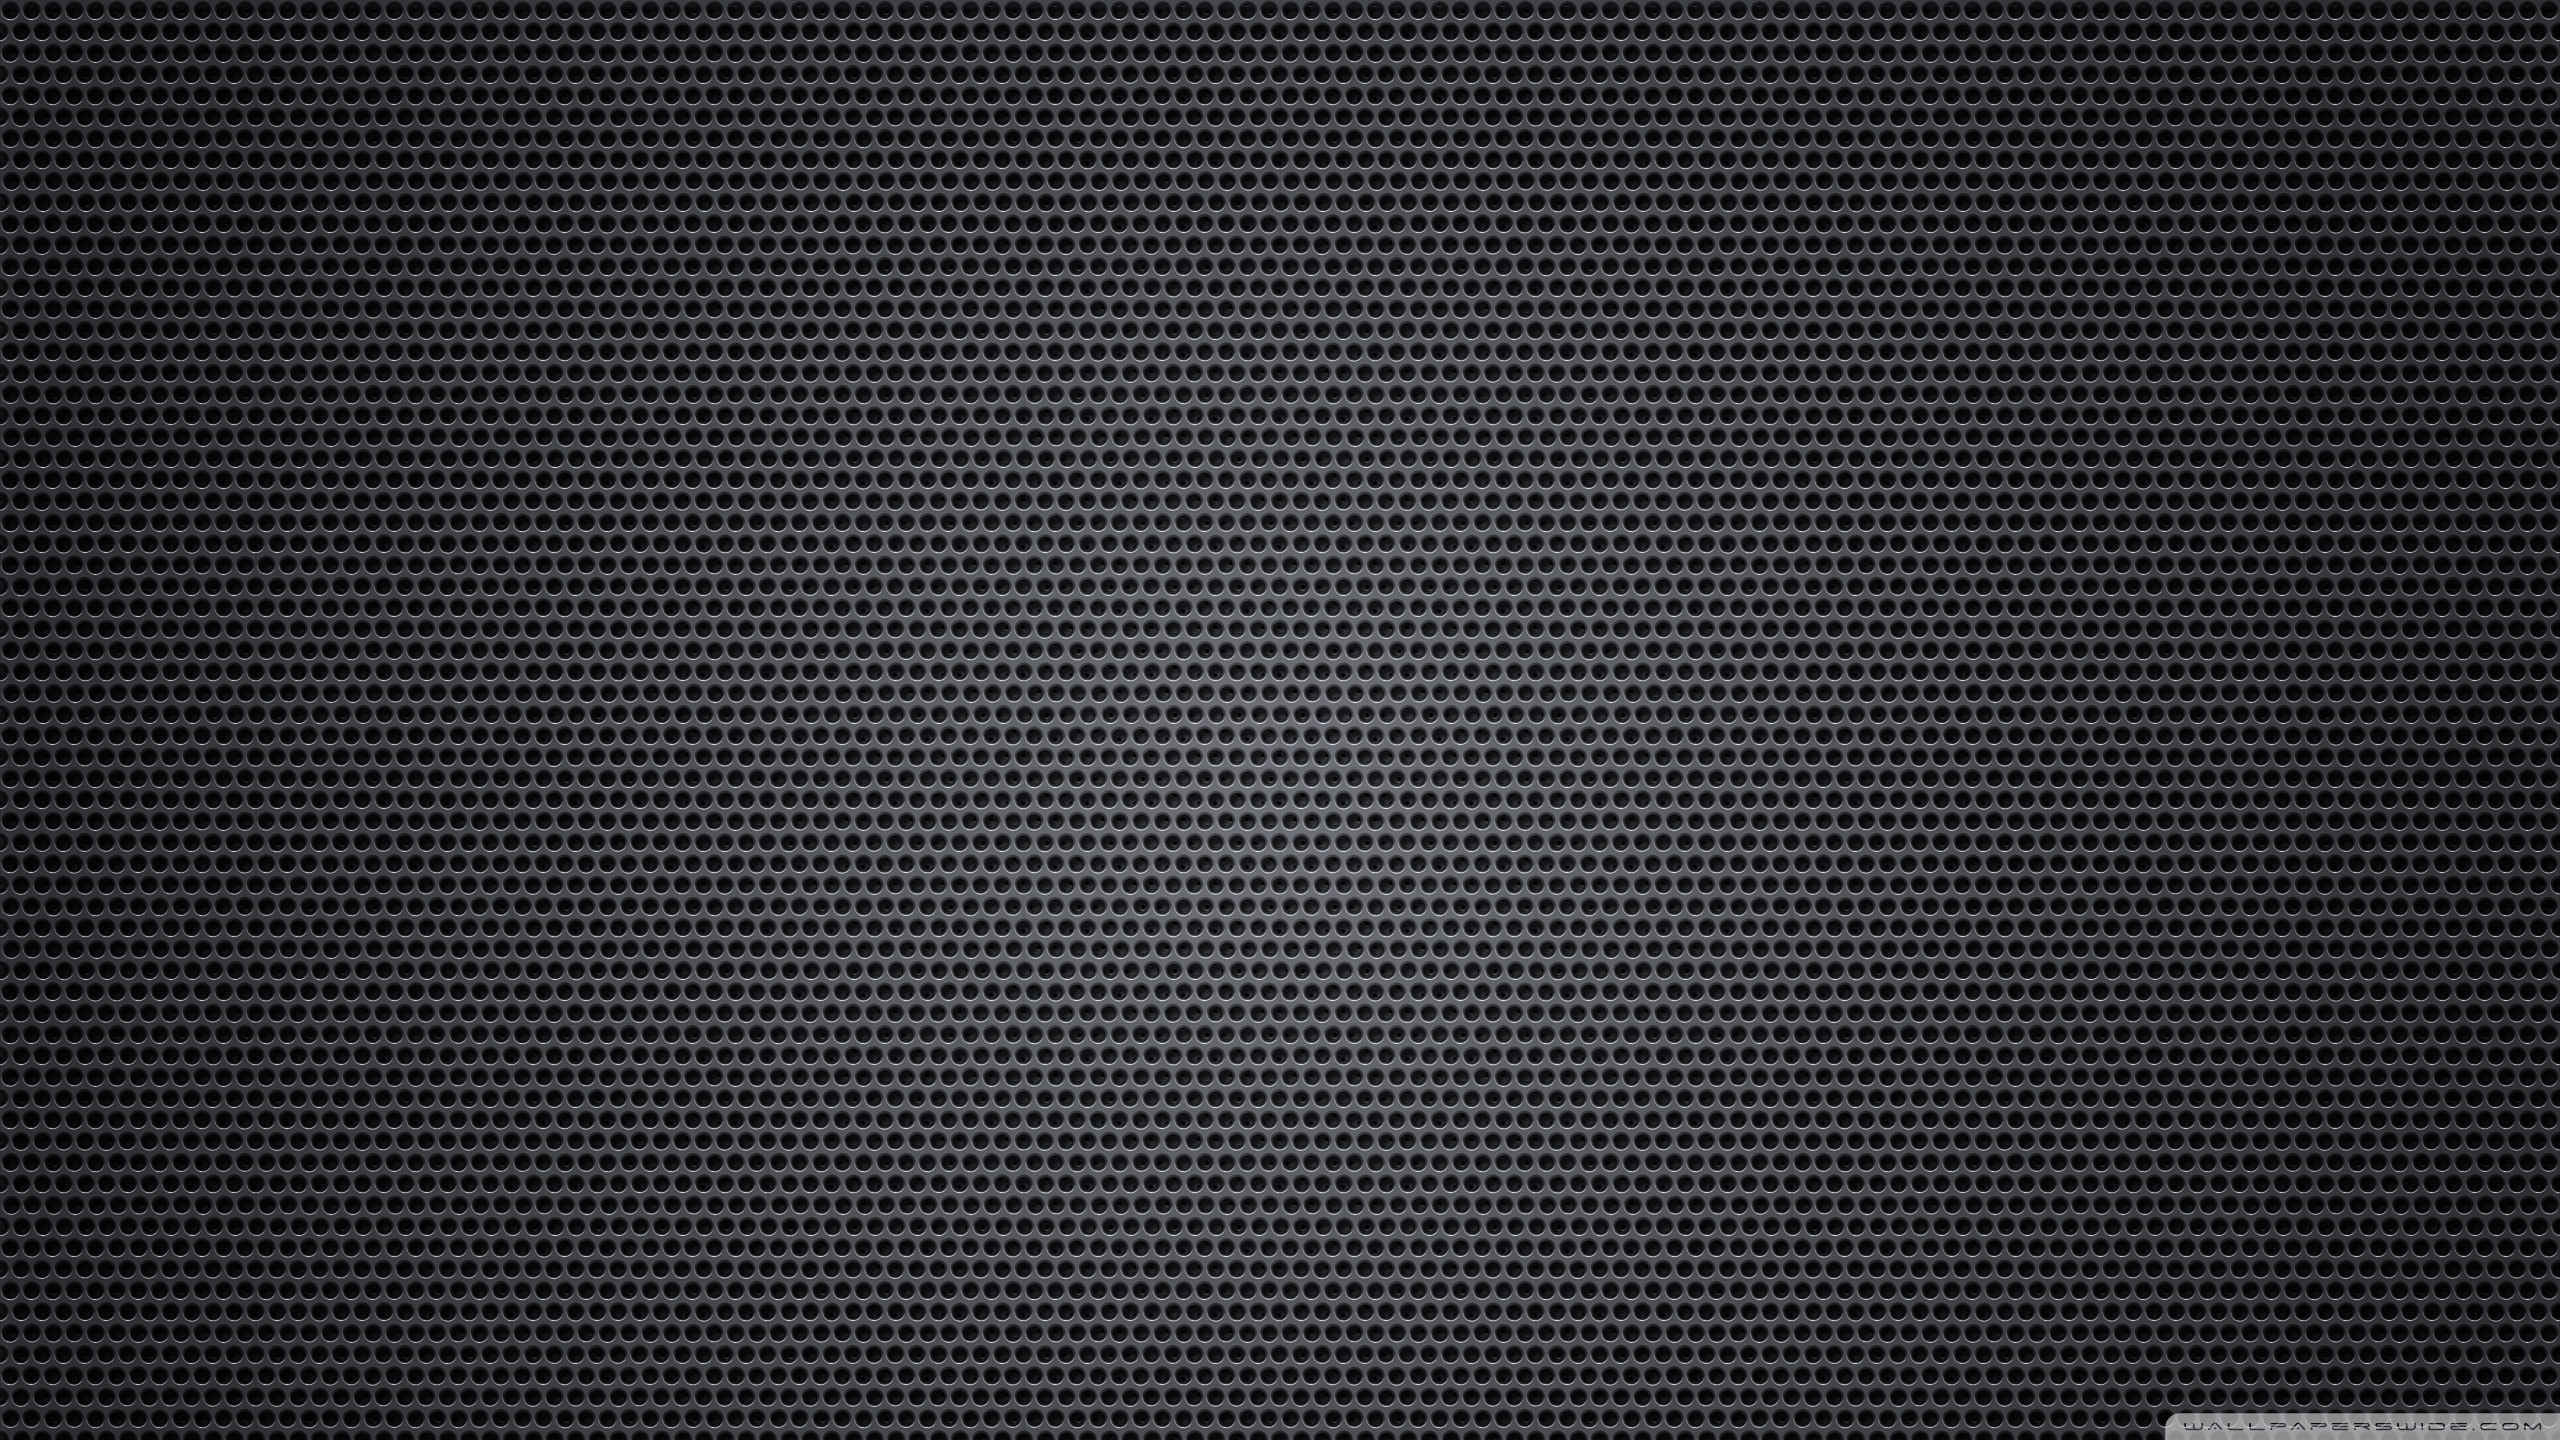 2560x1440-161-black-background-metal-hole-small-i-wallpaper ...